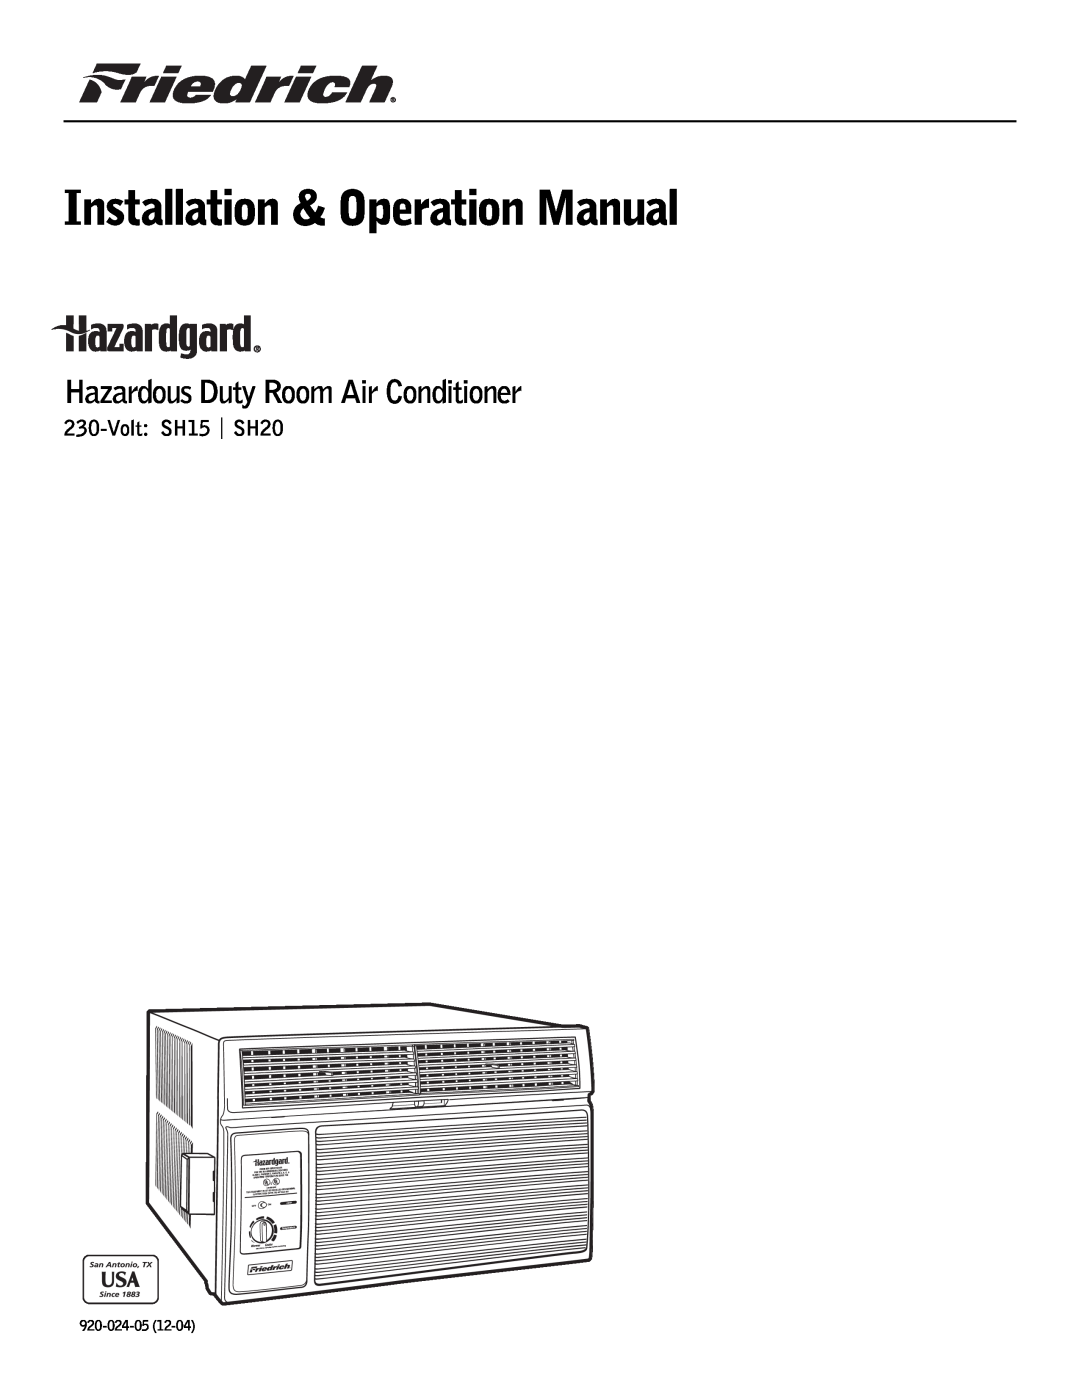 Friedrich operation manual Volt:SH15 | SH20, Hazardous Duty Room Air Conditioner, Installation & Operation Manual 